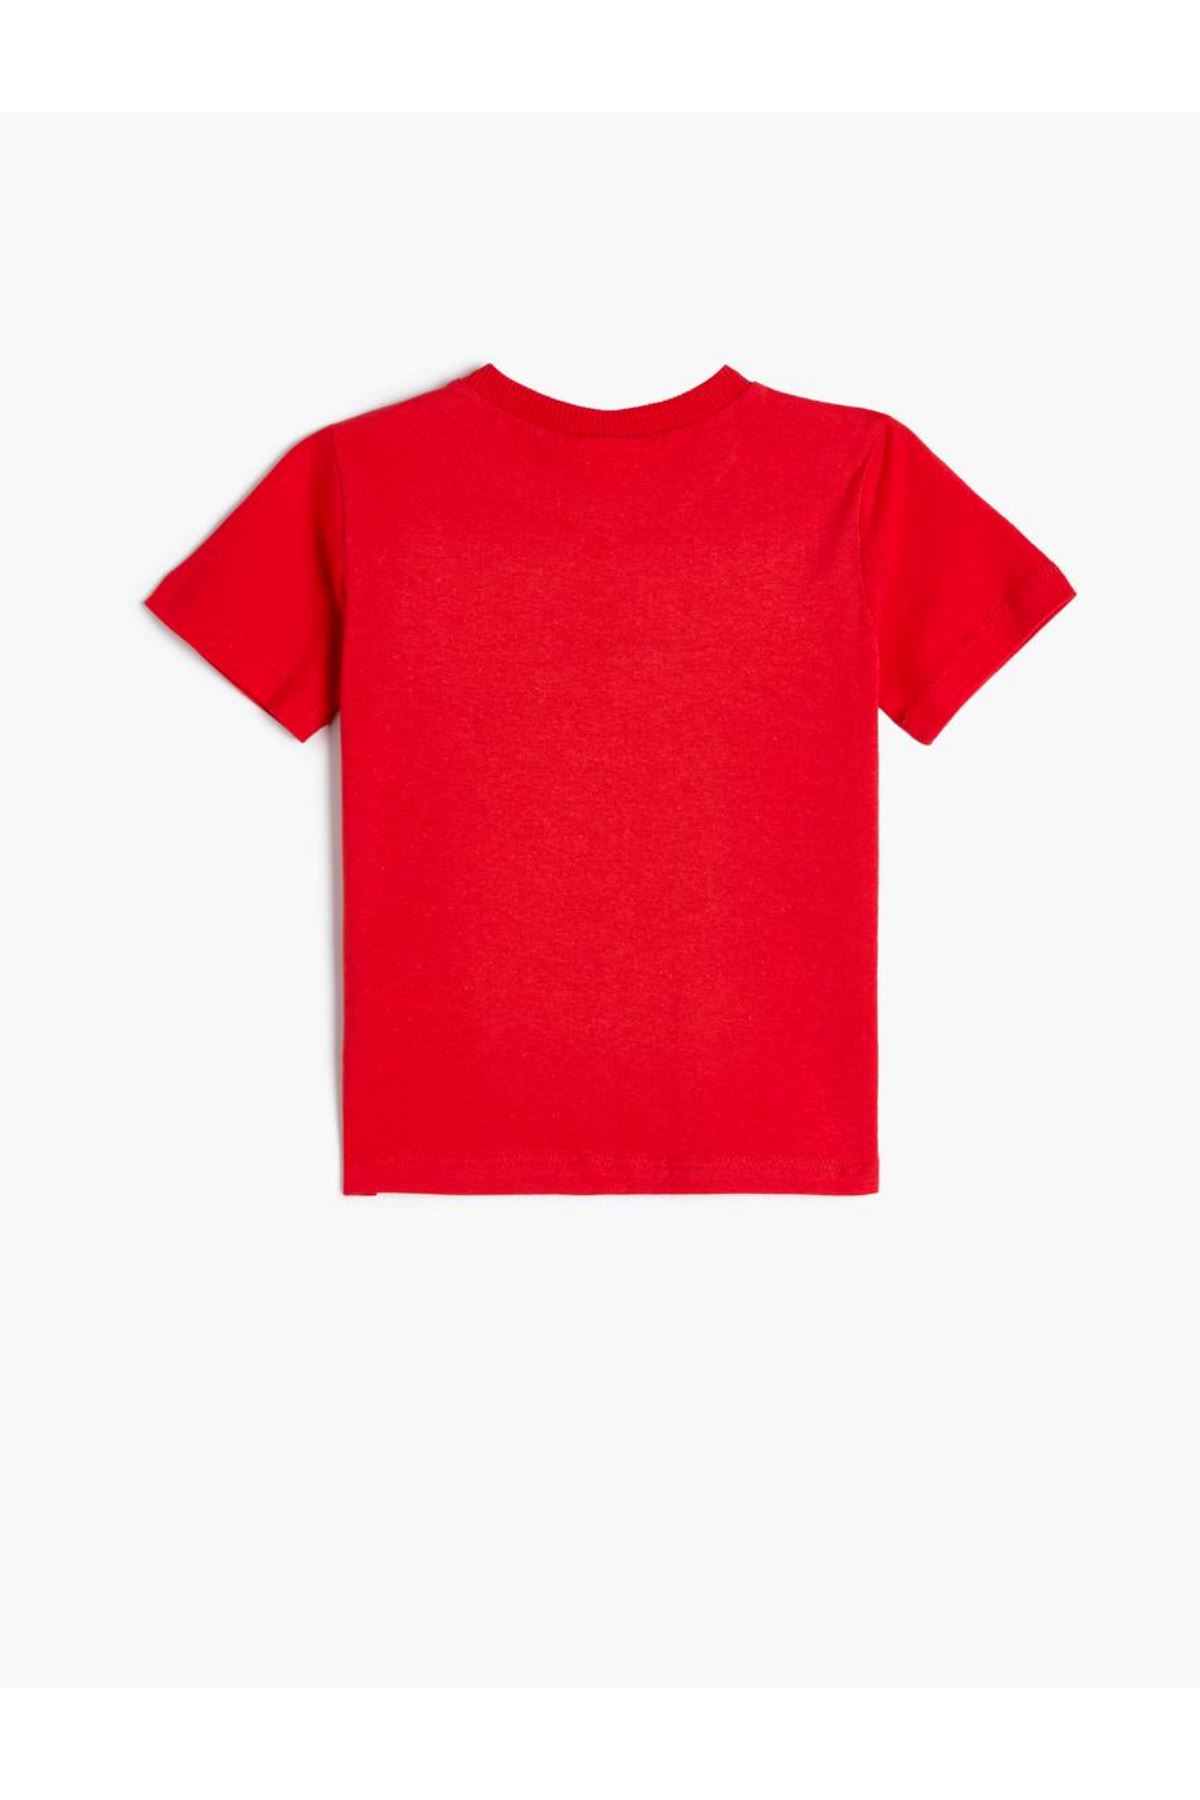 Koton Erkek Bebek Kırmızı Tişört - 4SMB10023TK